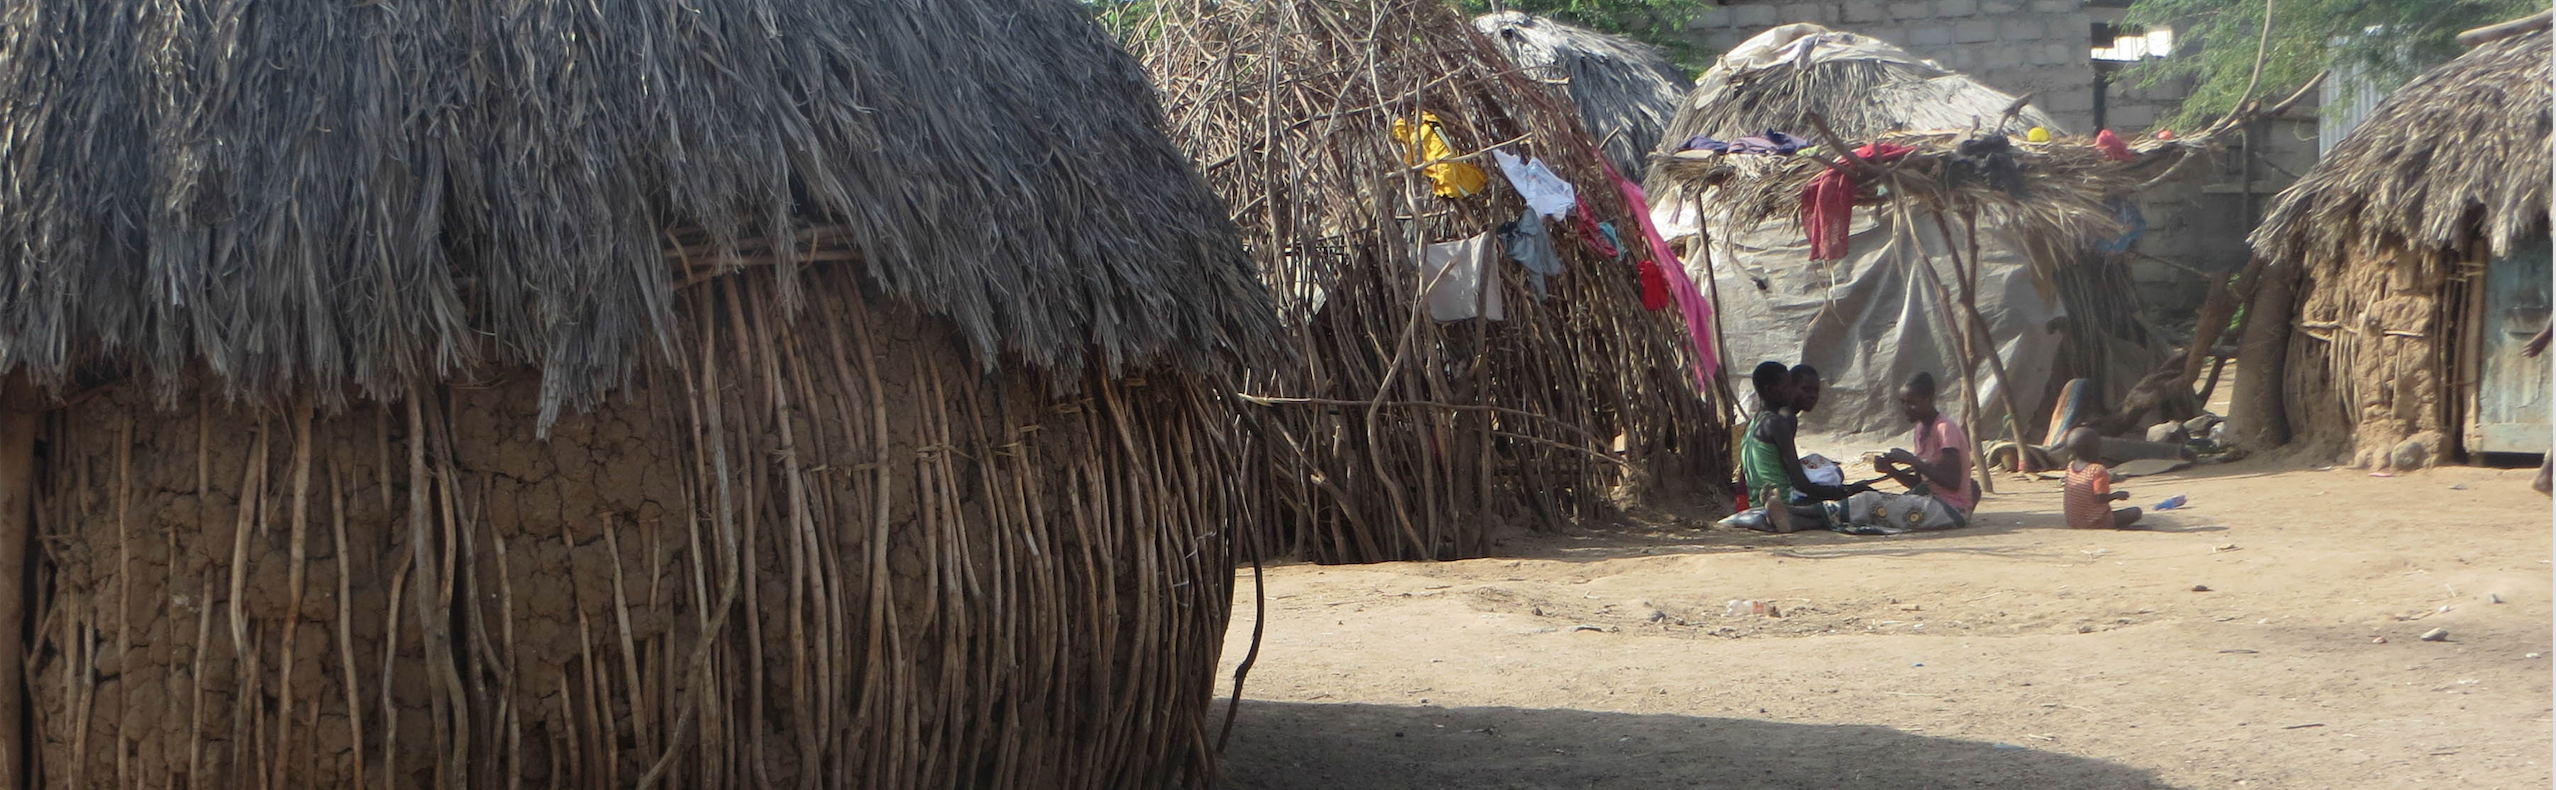 Homes on the outskirt of Lodwar, Kenya. Credit: Marina Korzenevica